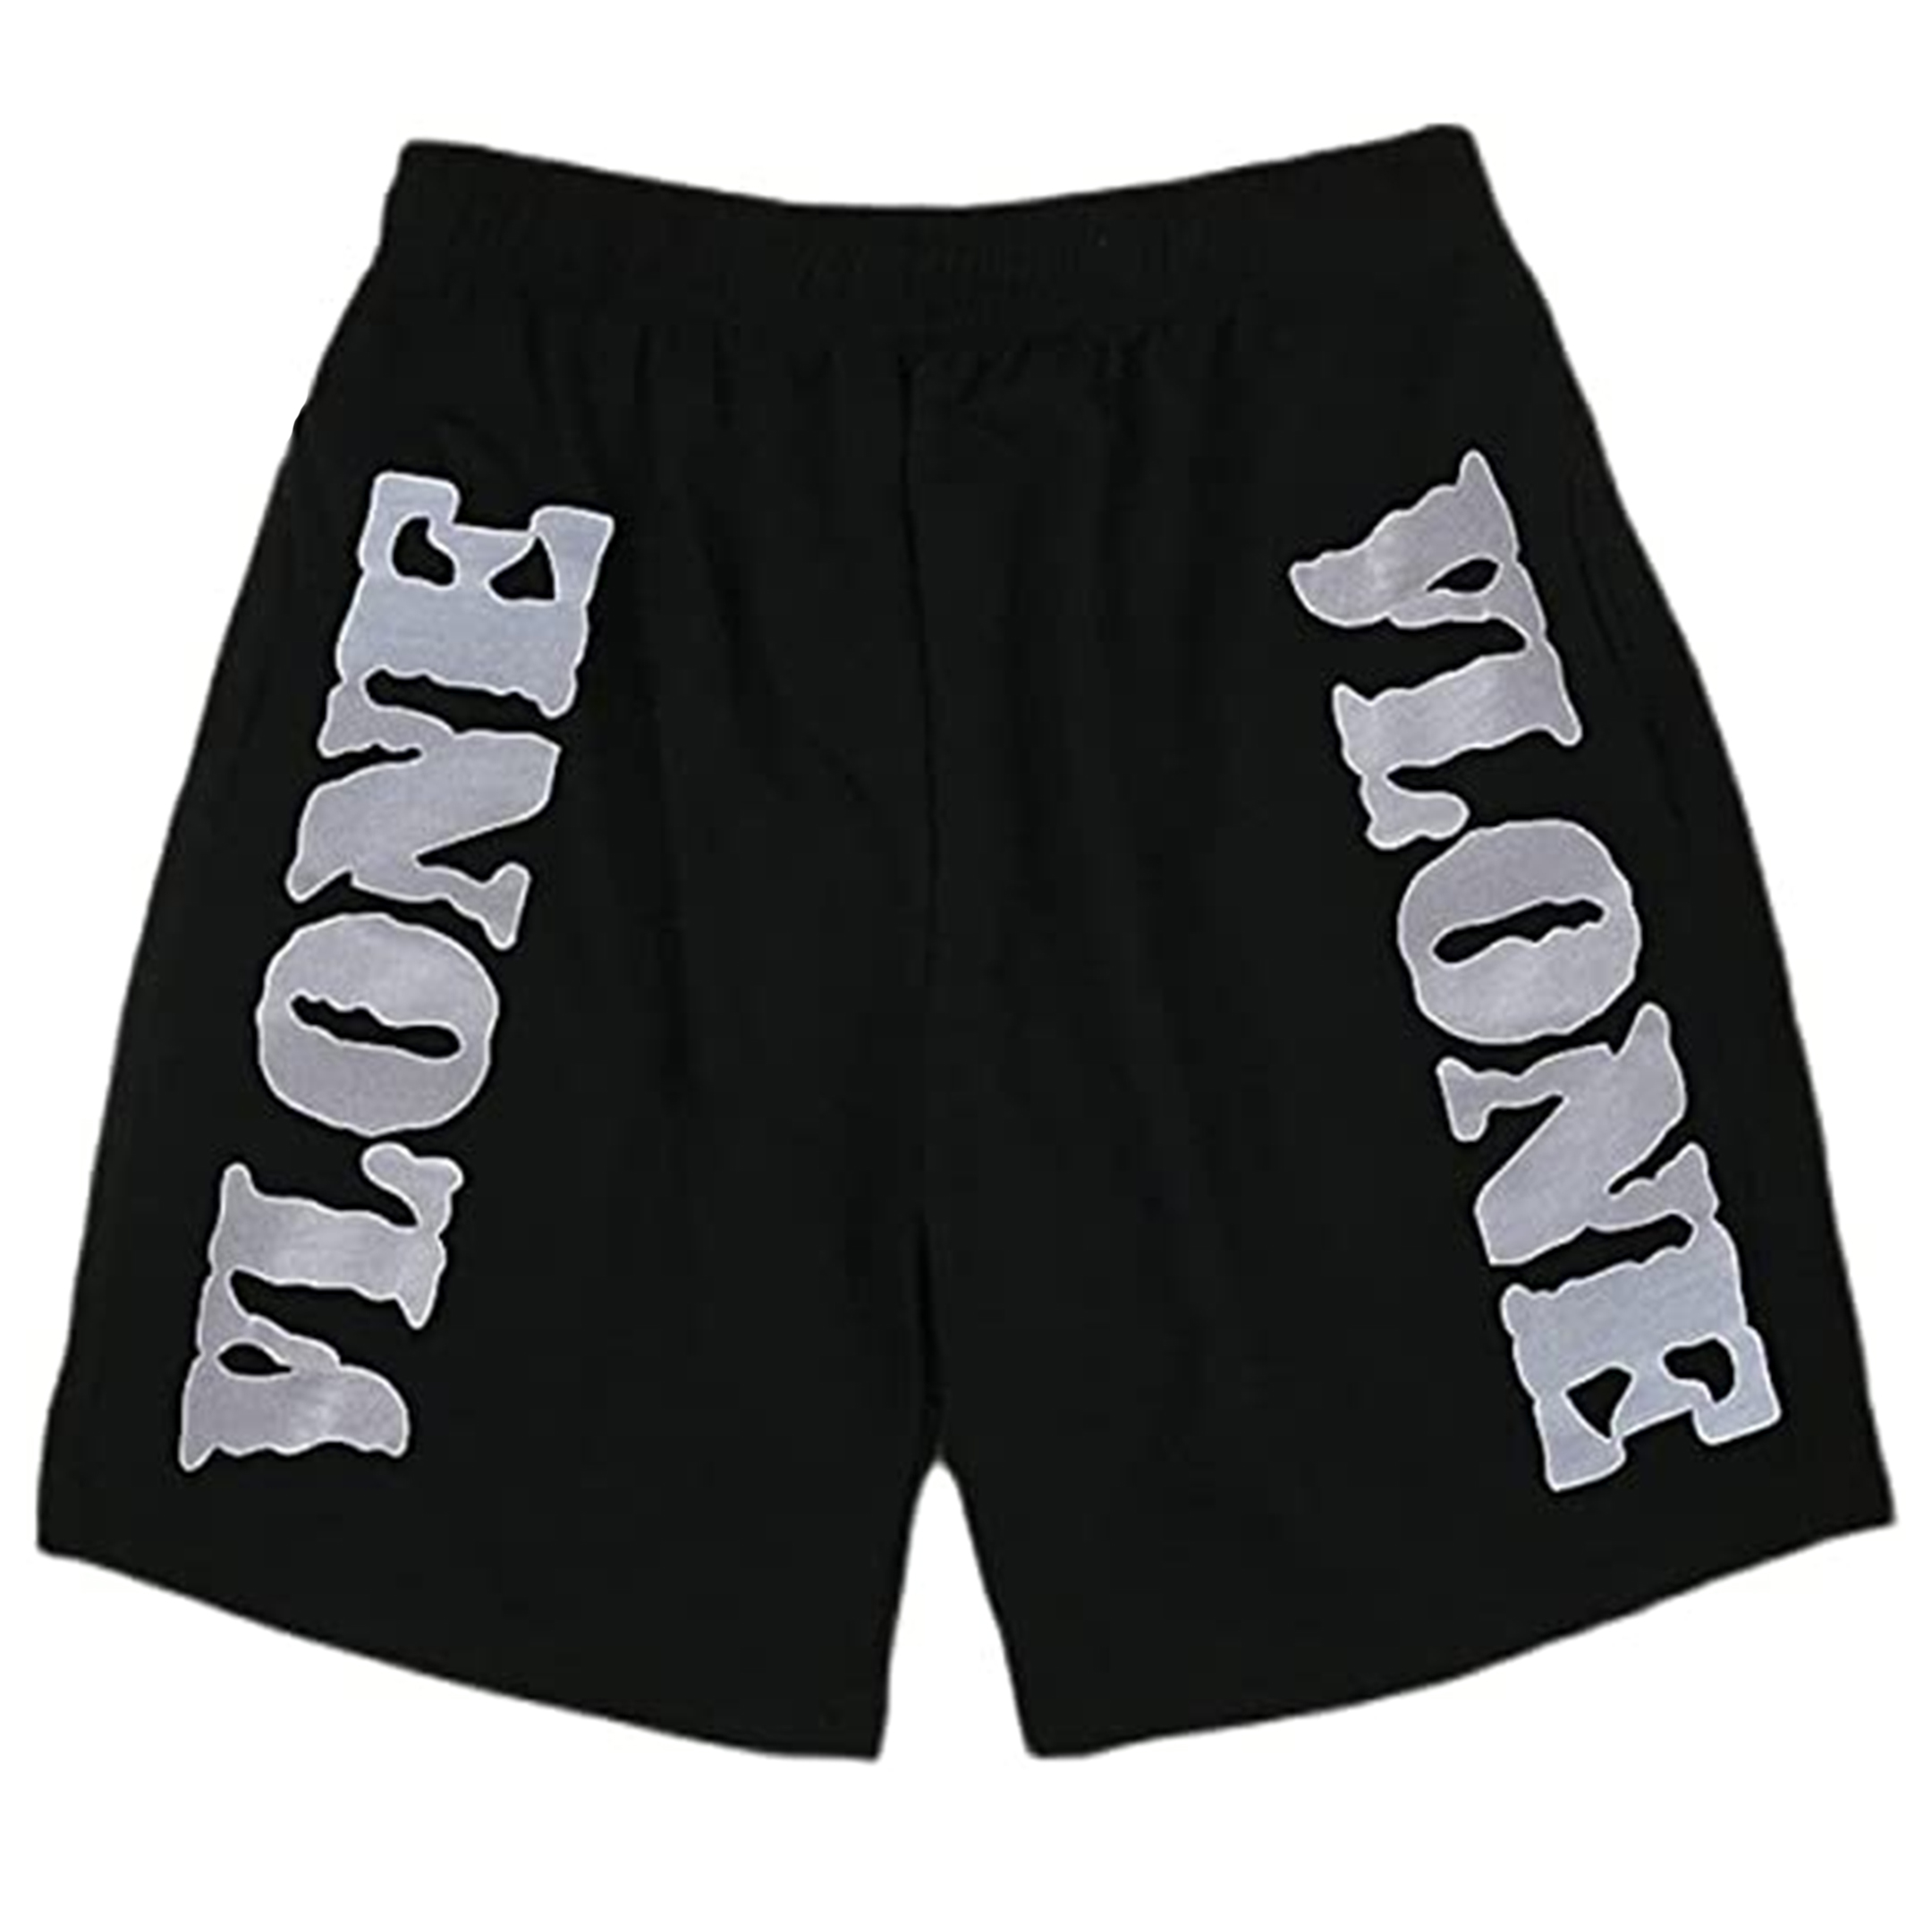 Vlone Black Short For Men - Vlone Club